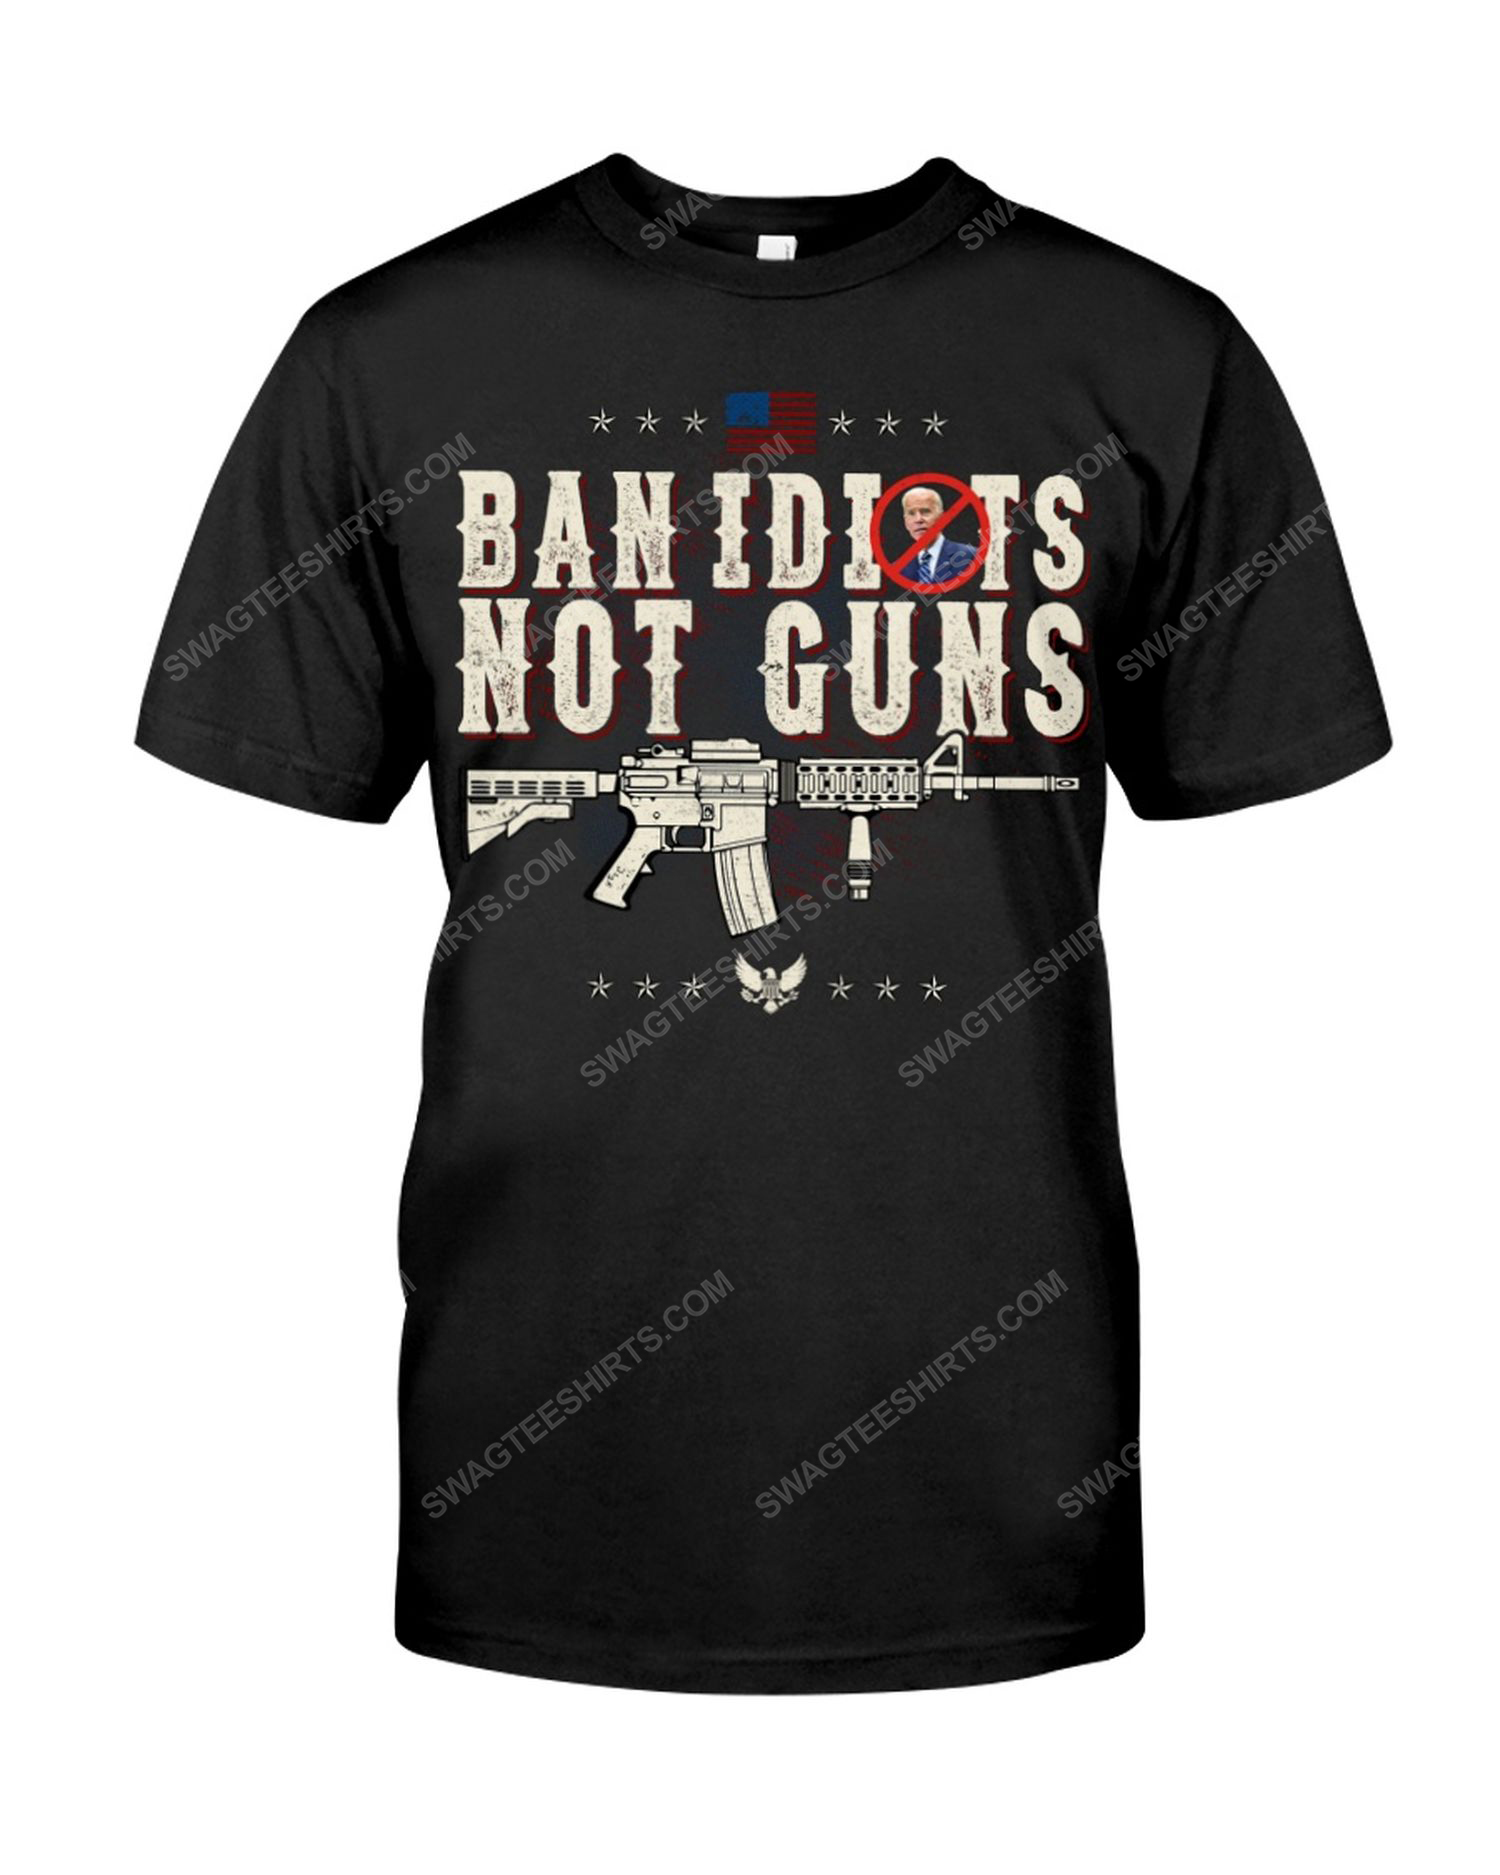 Ban idiots not guns political tshirt